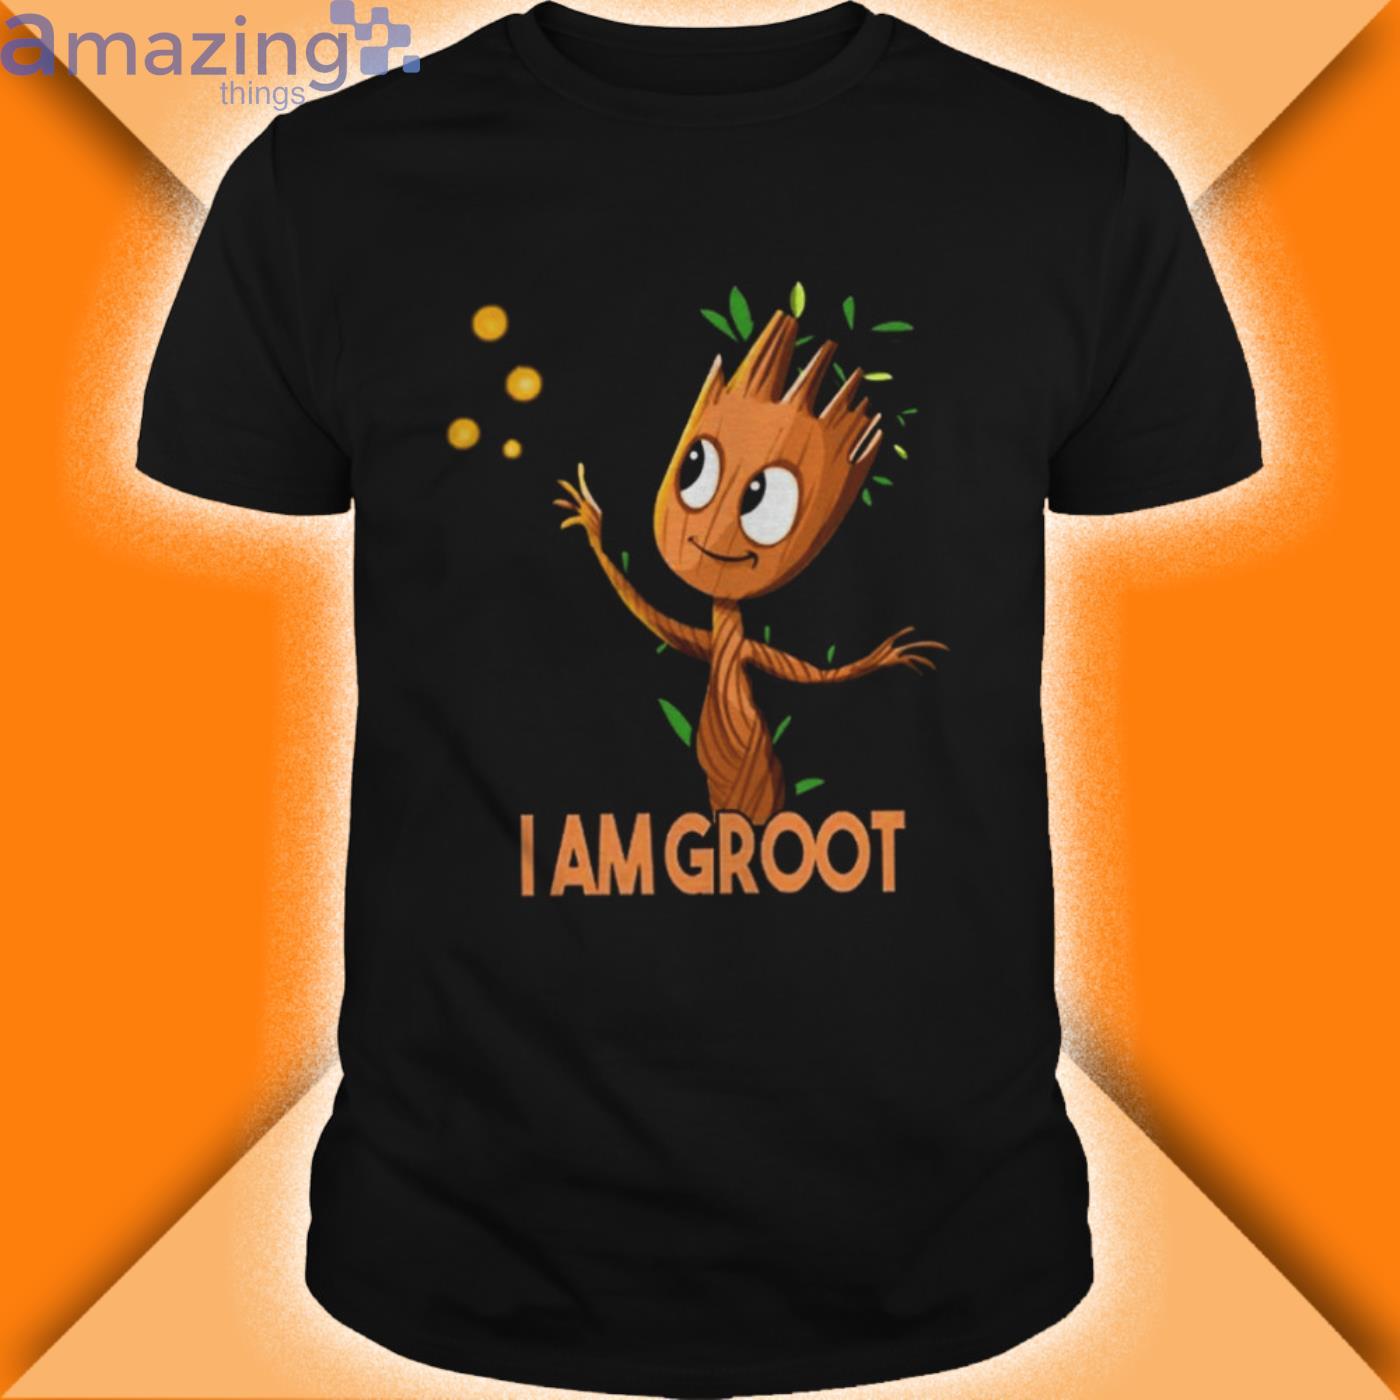 I Am Groot Hoodie Long Sleeves Sweatshirt T-Shirt Product Photo 1